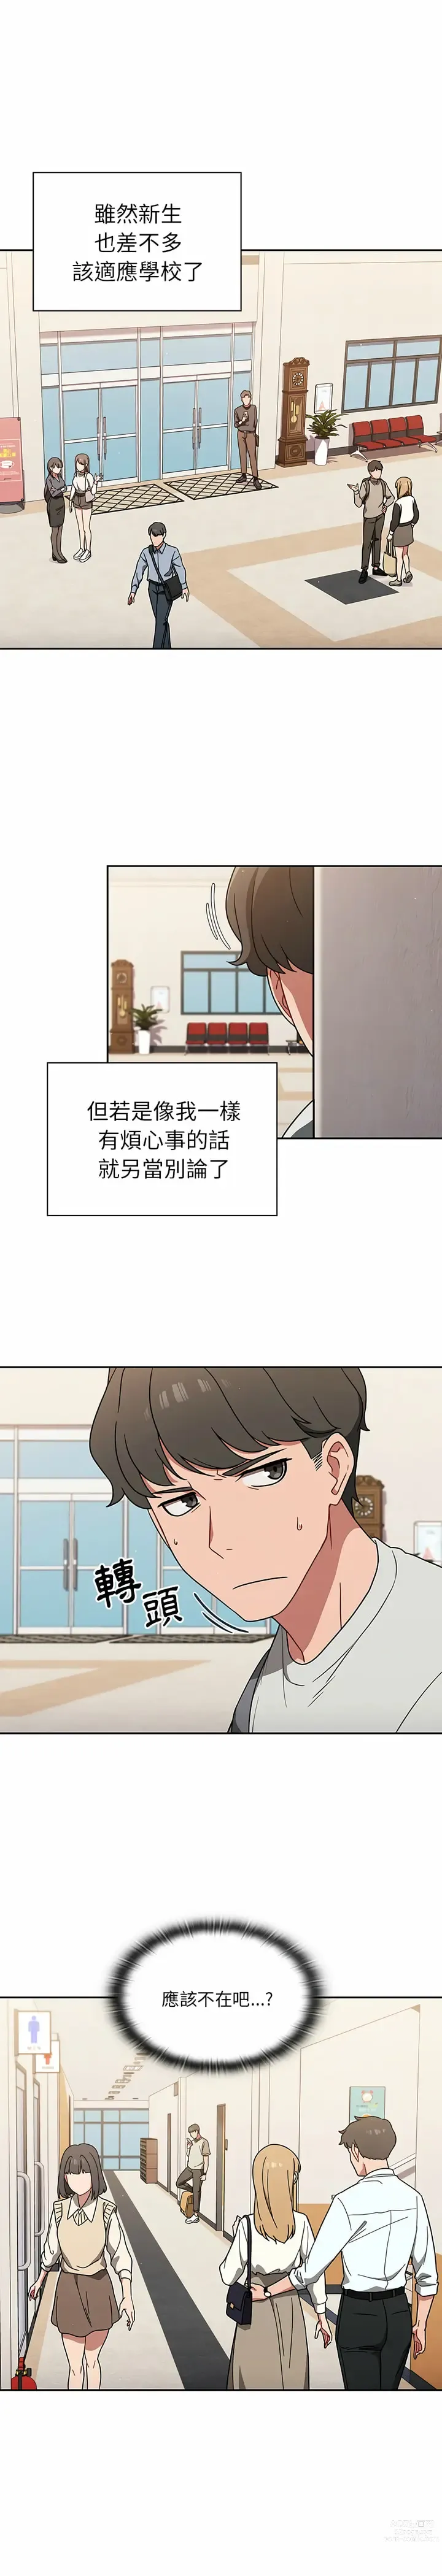 Page 5 of manga 調教開關 1-56 第一季 END